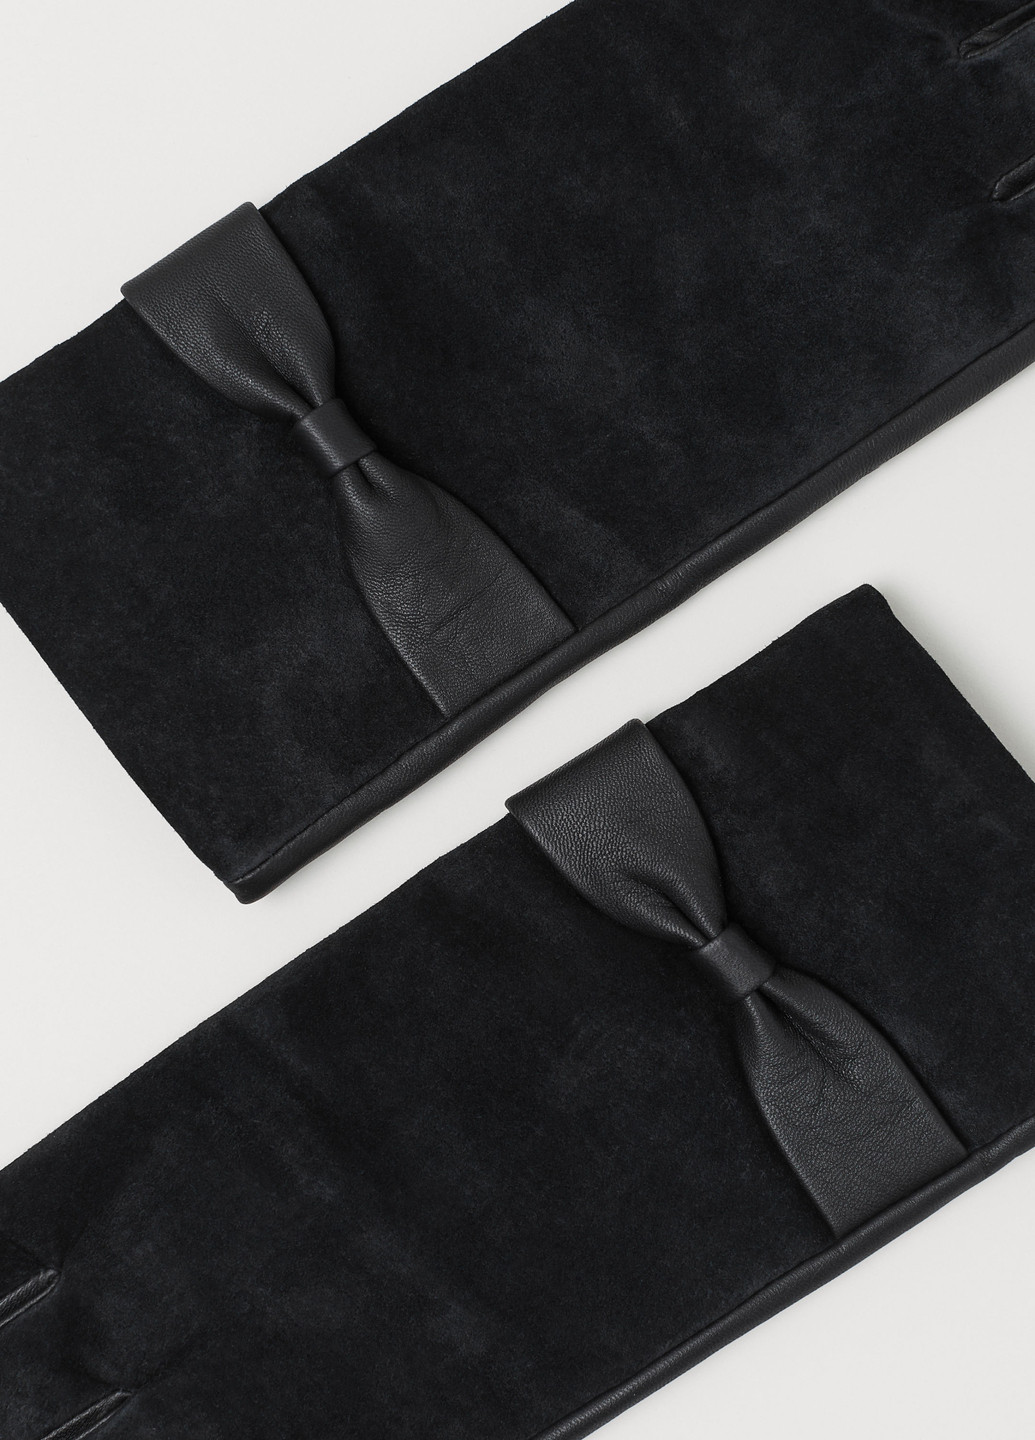 Перчатки H&M однотонные чёрные кэжуалы